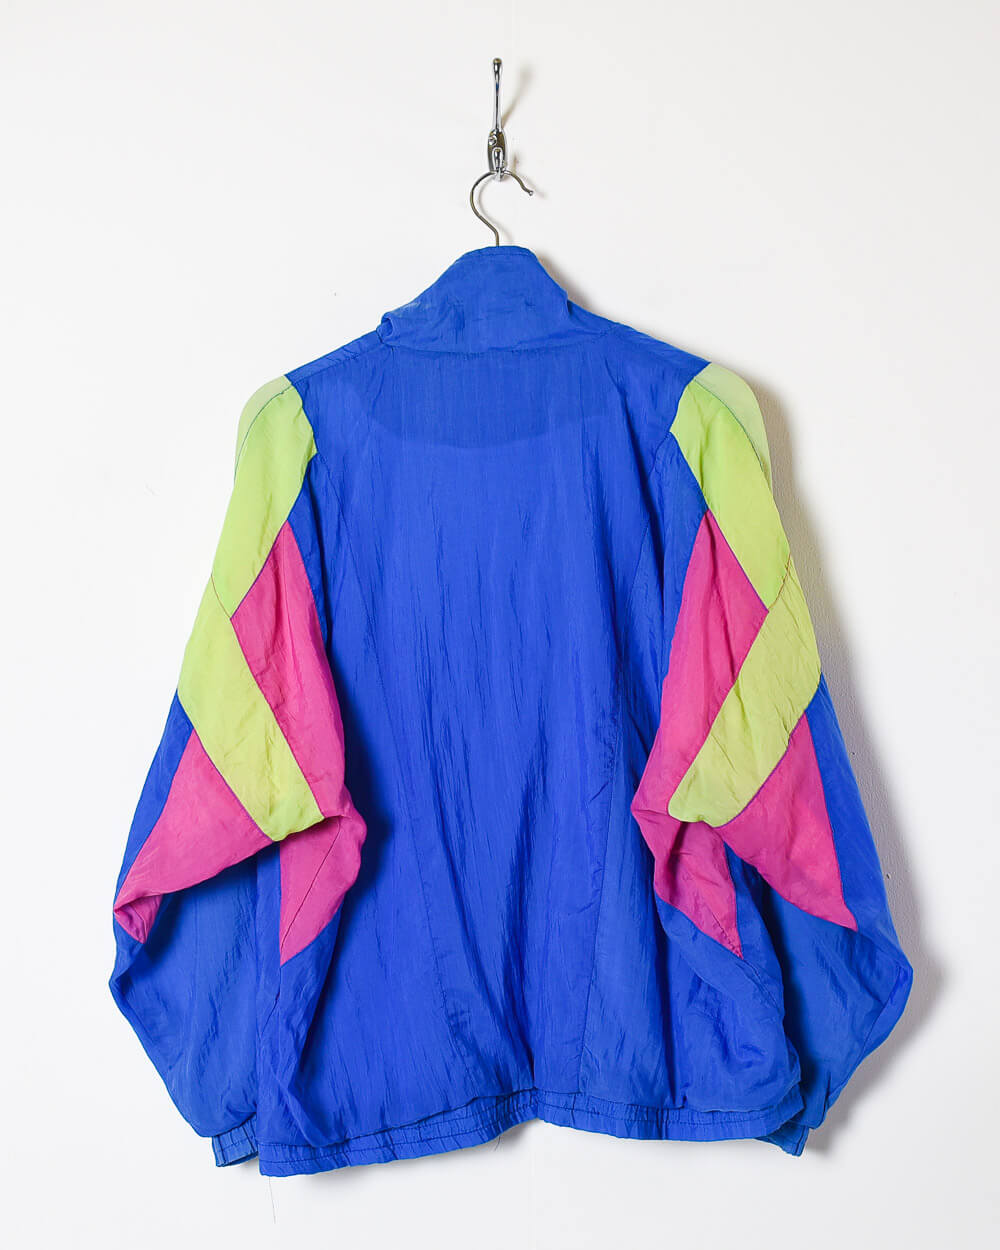 Blue Vintage Festival Shell Jacket - Medium